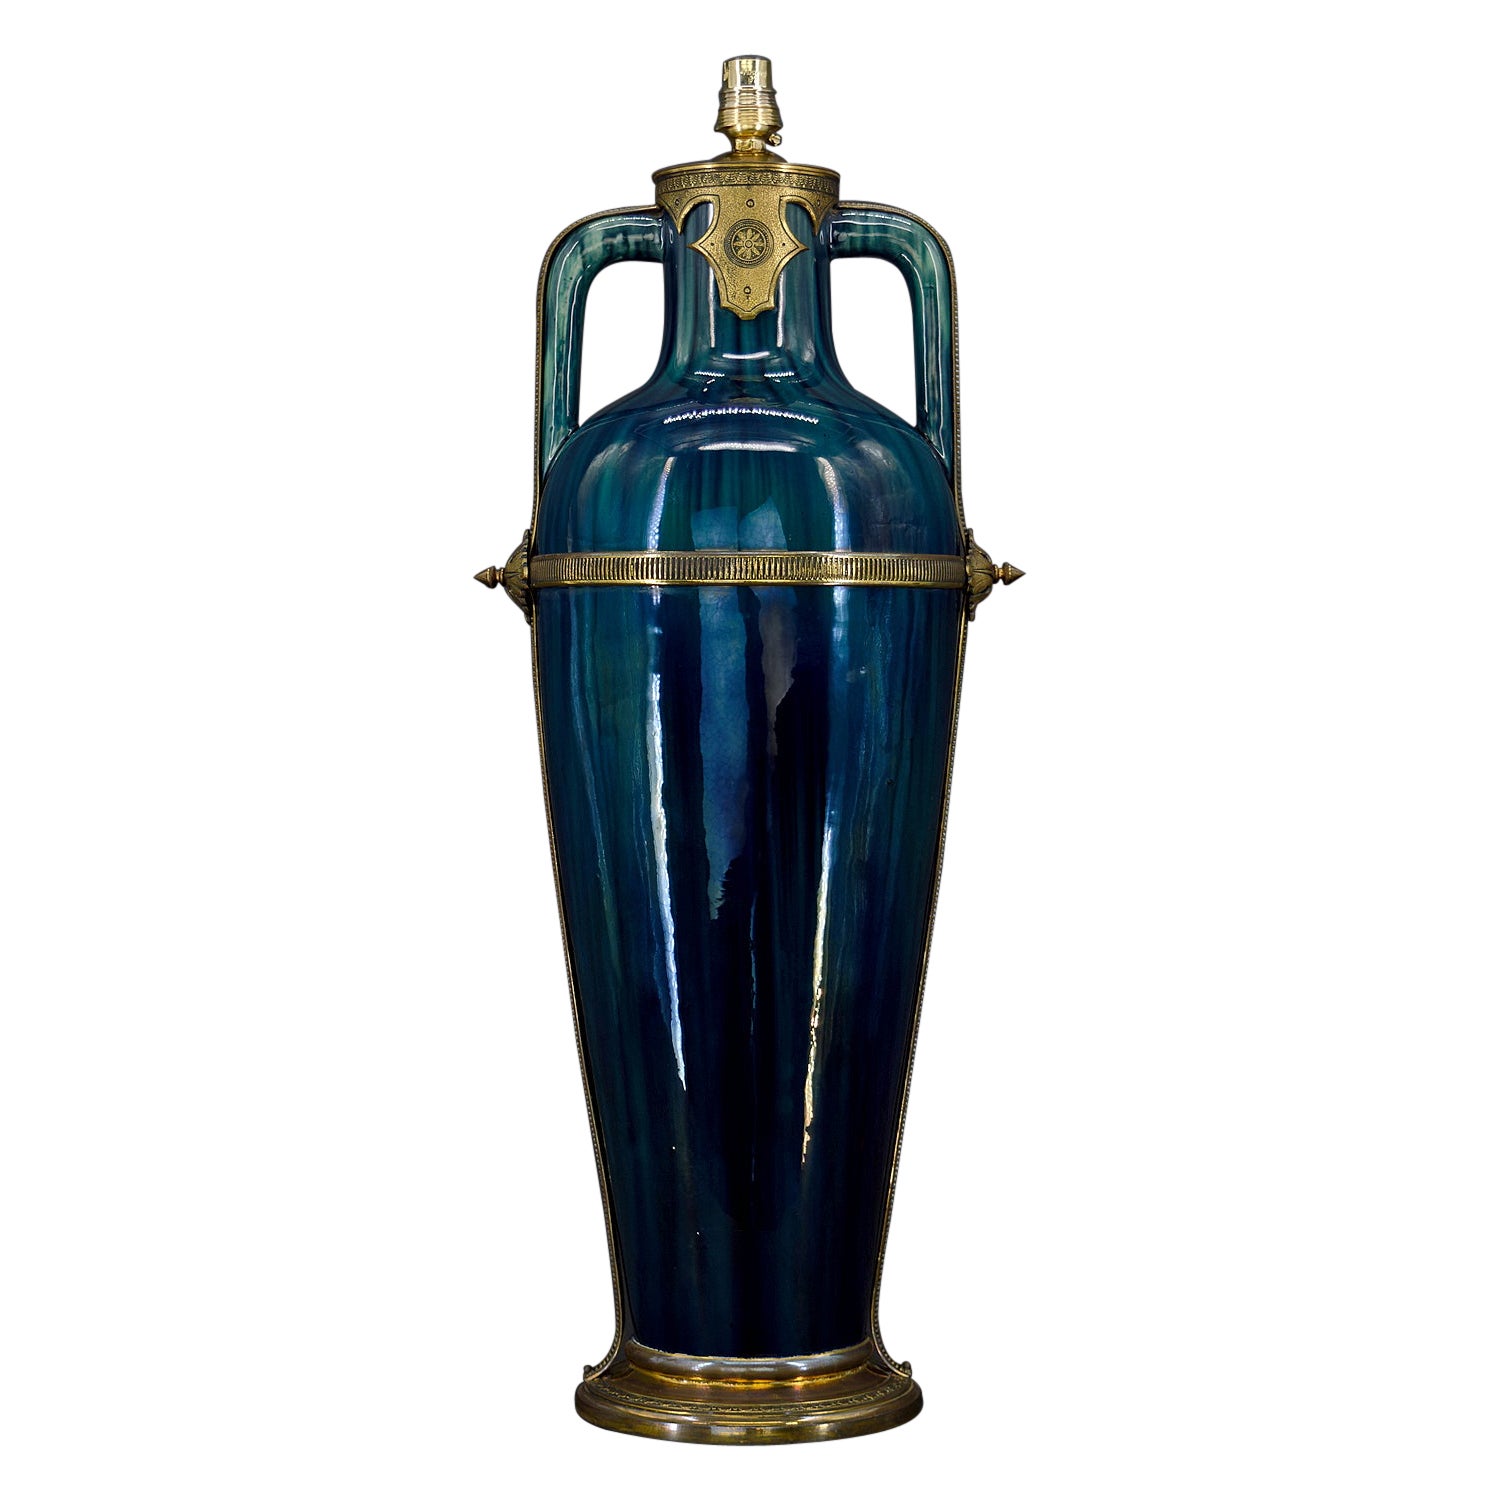 Art Nouveau Blue Ceramic Vase-Lamp attributed to Paul Milet, France, circa 1900